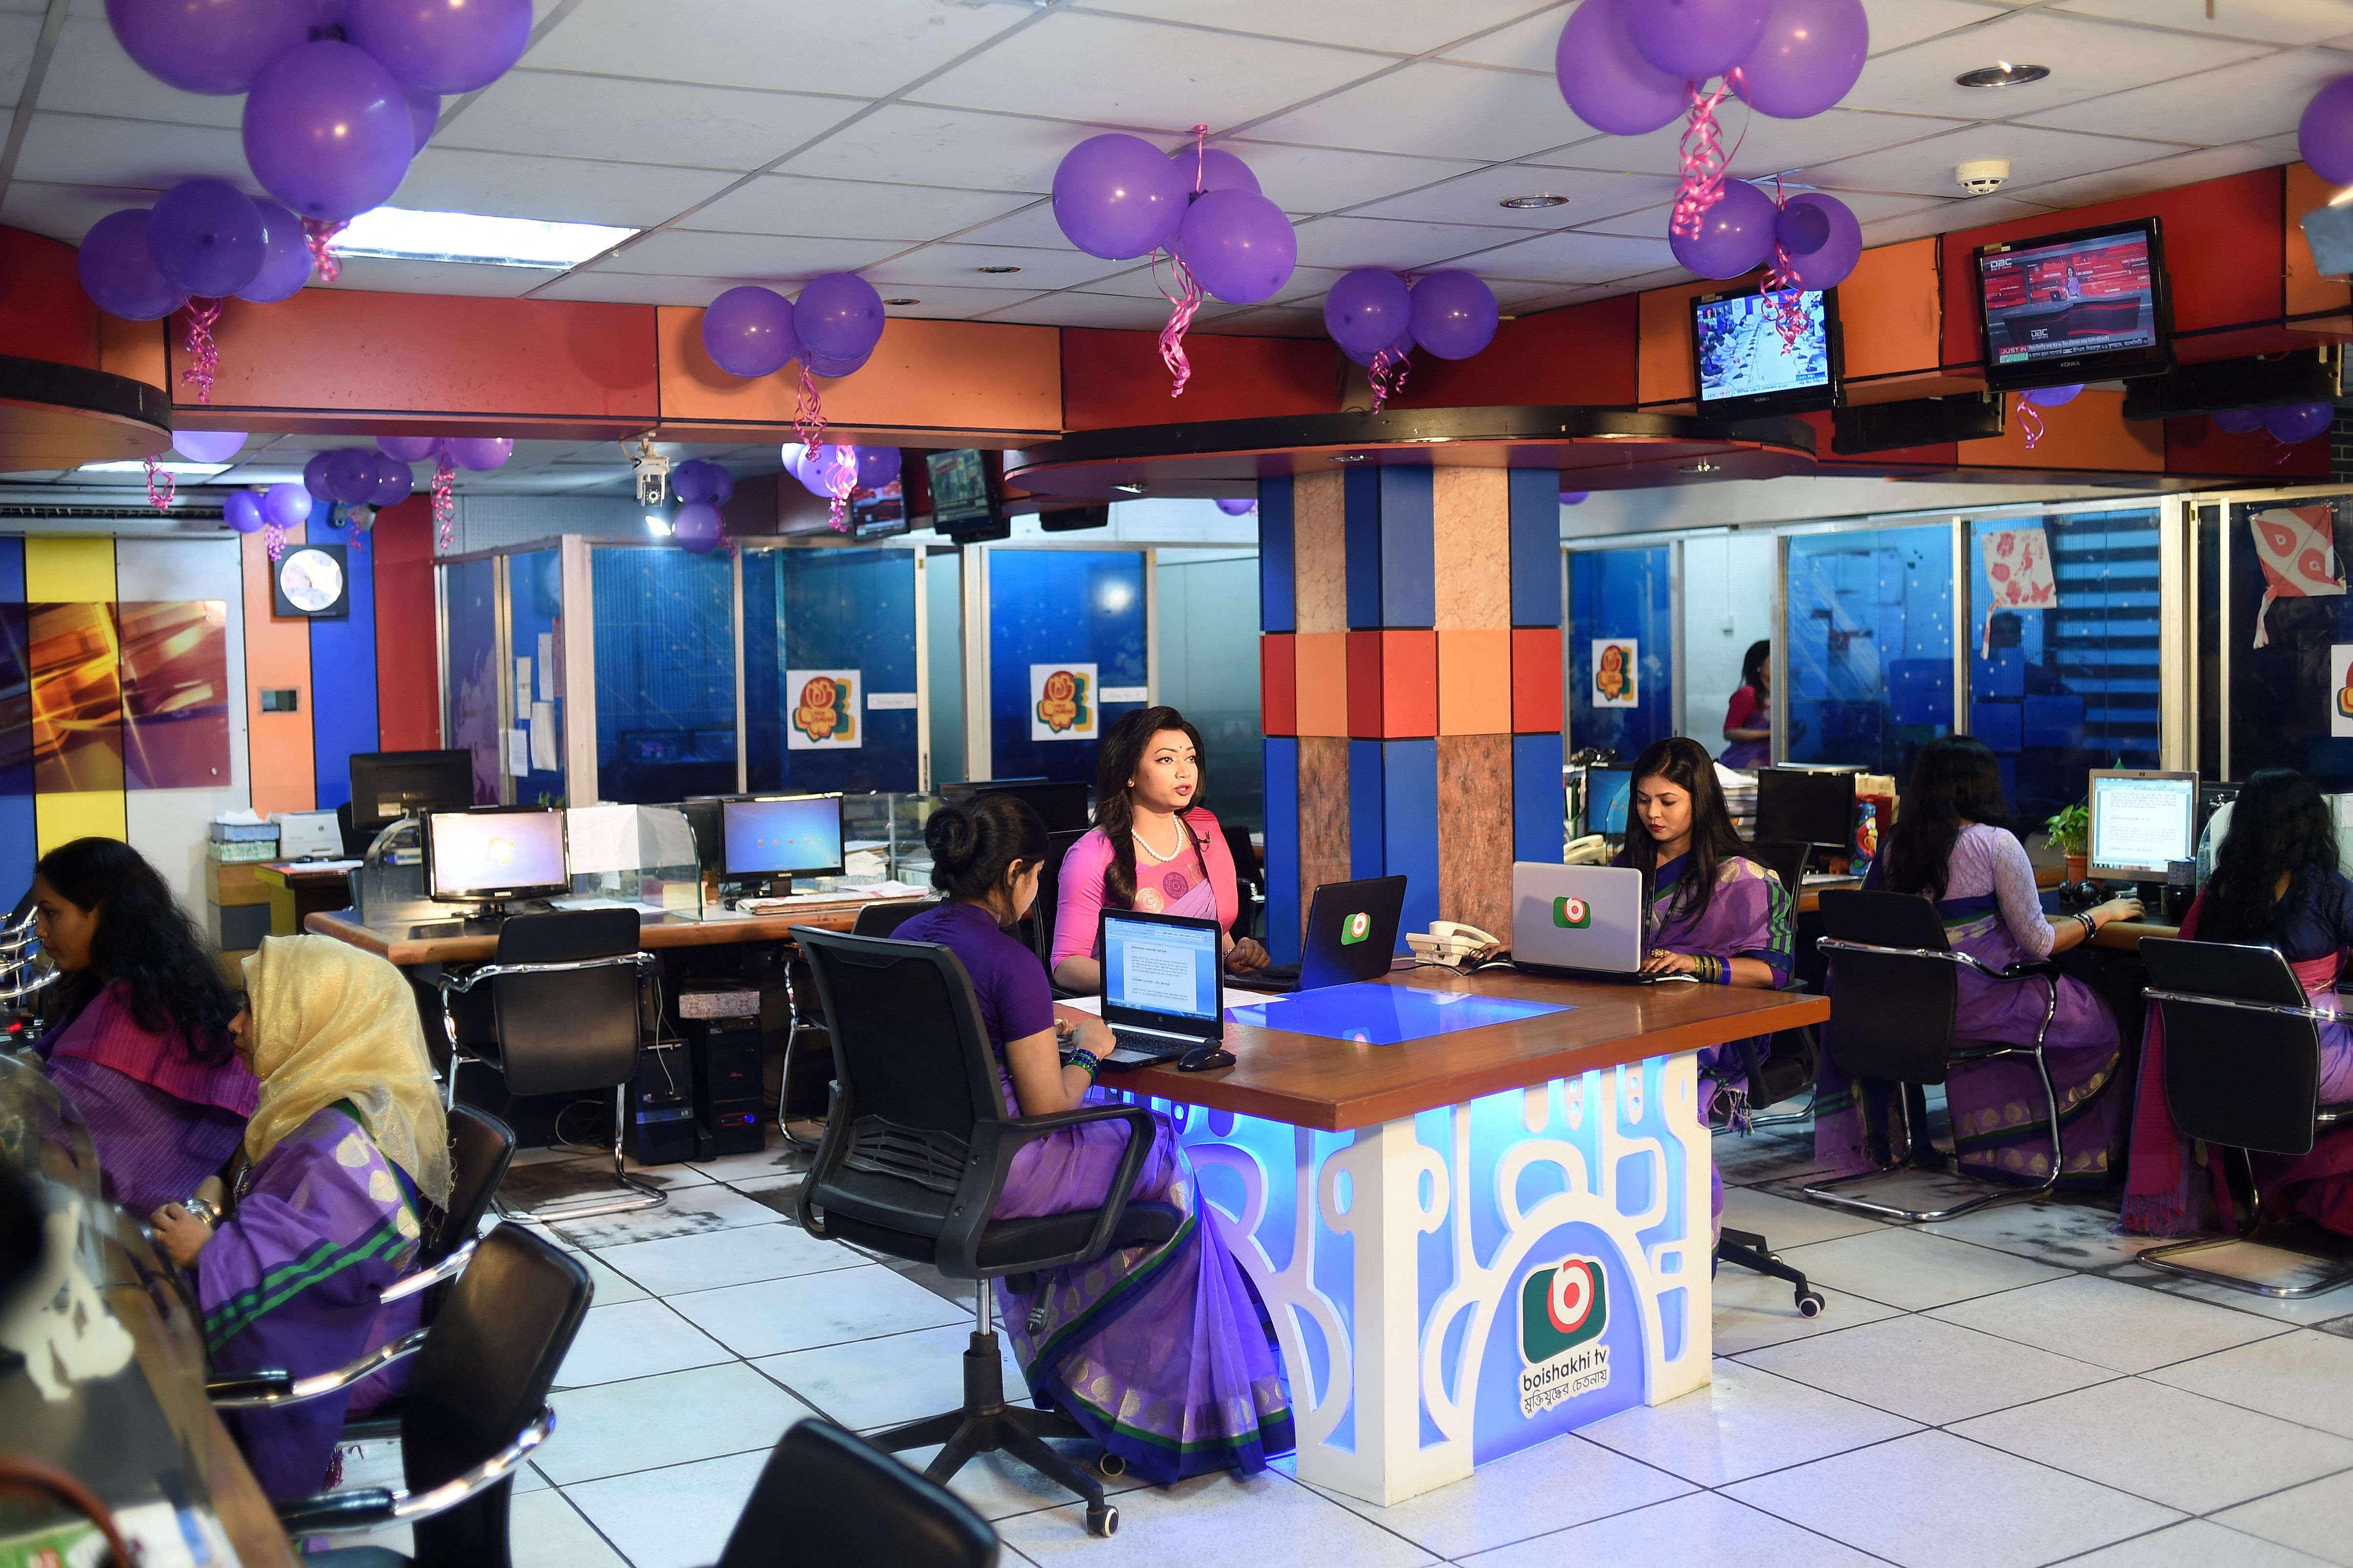 Tashnuva Anan Shishir (4L) presents the news on television at a news studio photo.